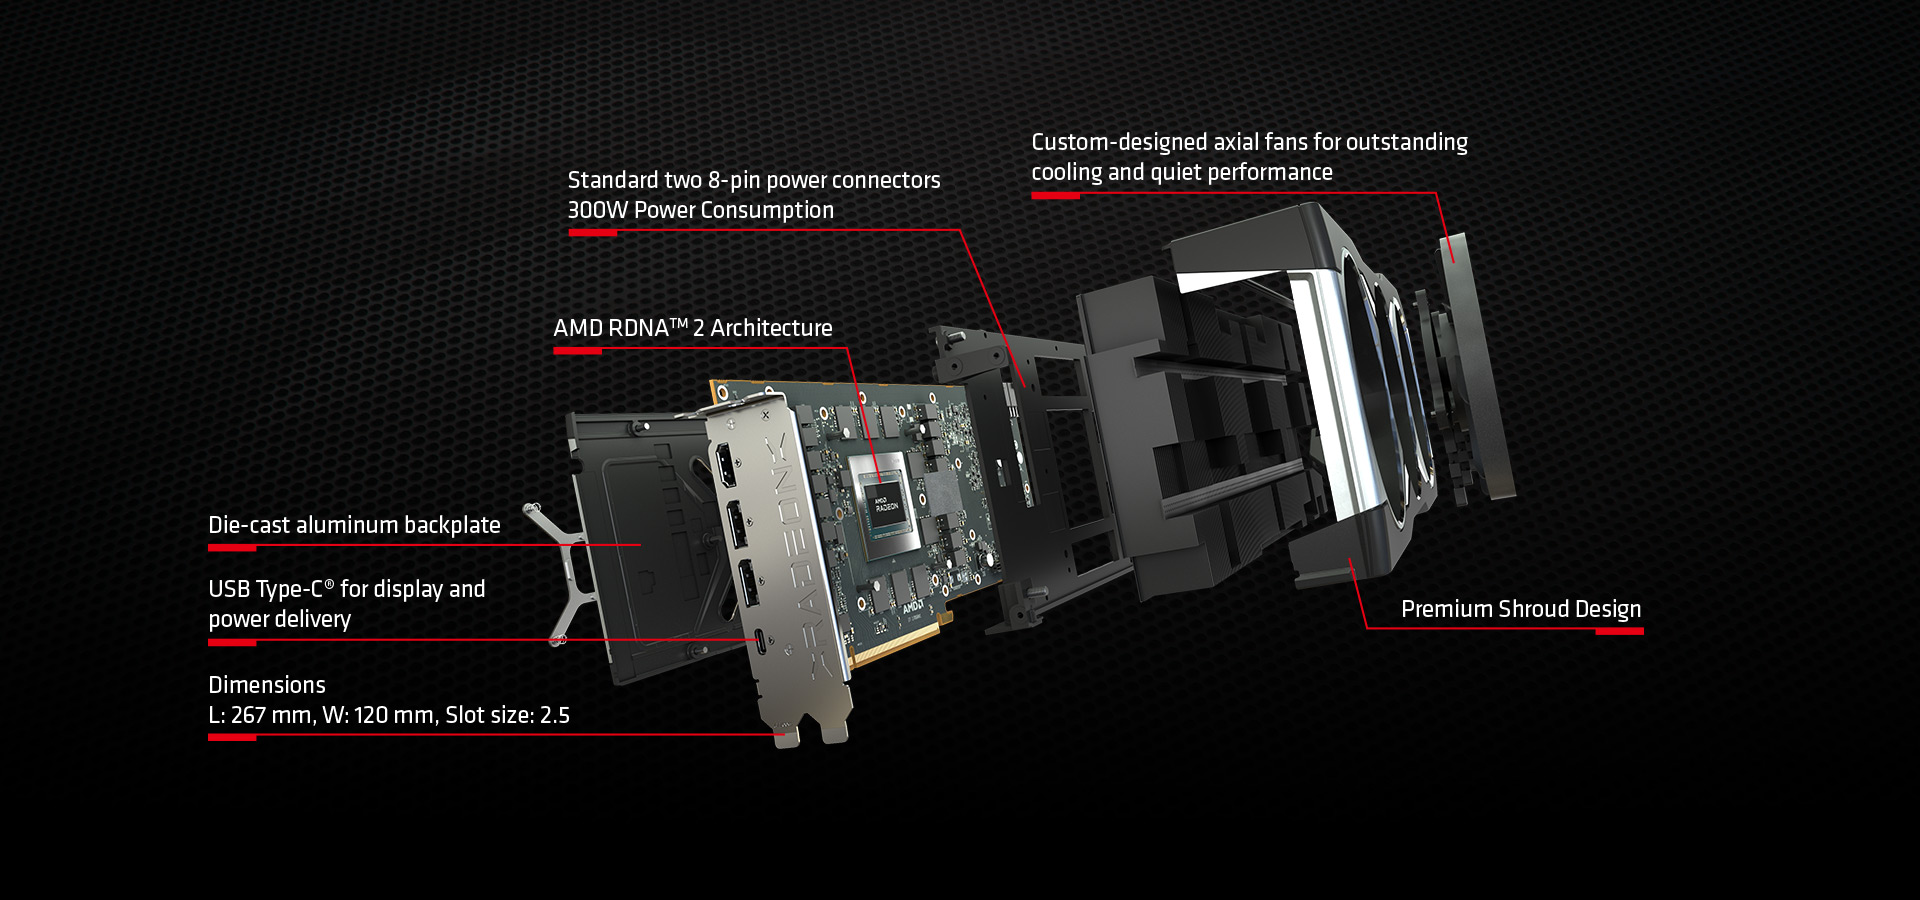 AMD Radeon RX 6800 XT and 6900 GPUs target 4K gaming, start at $579 - CNET